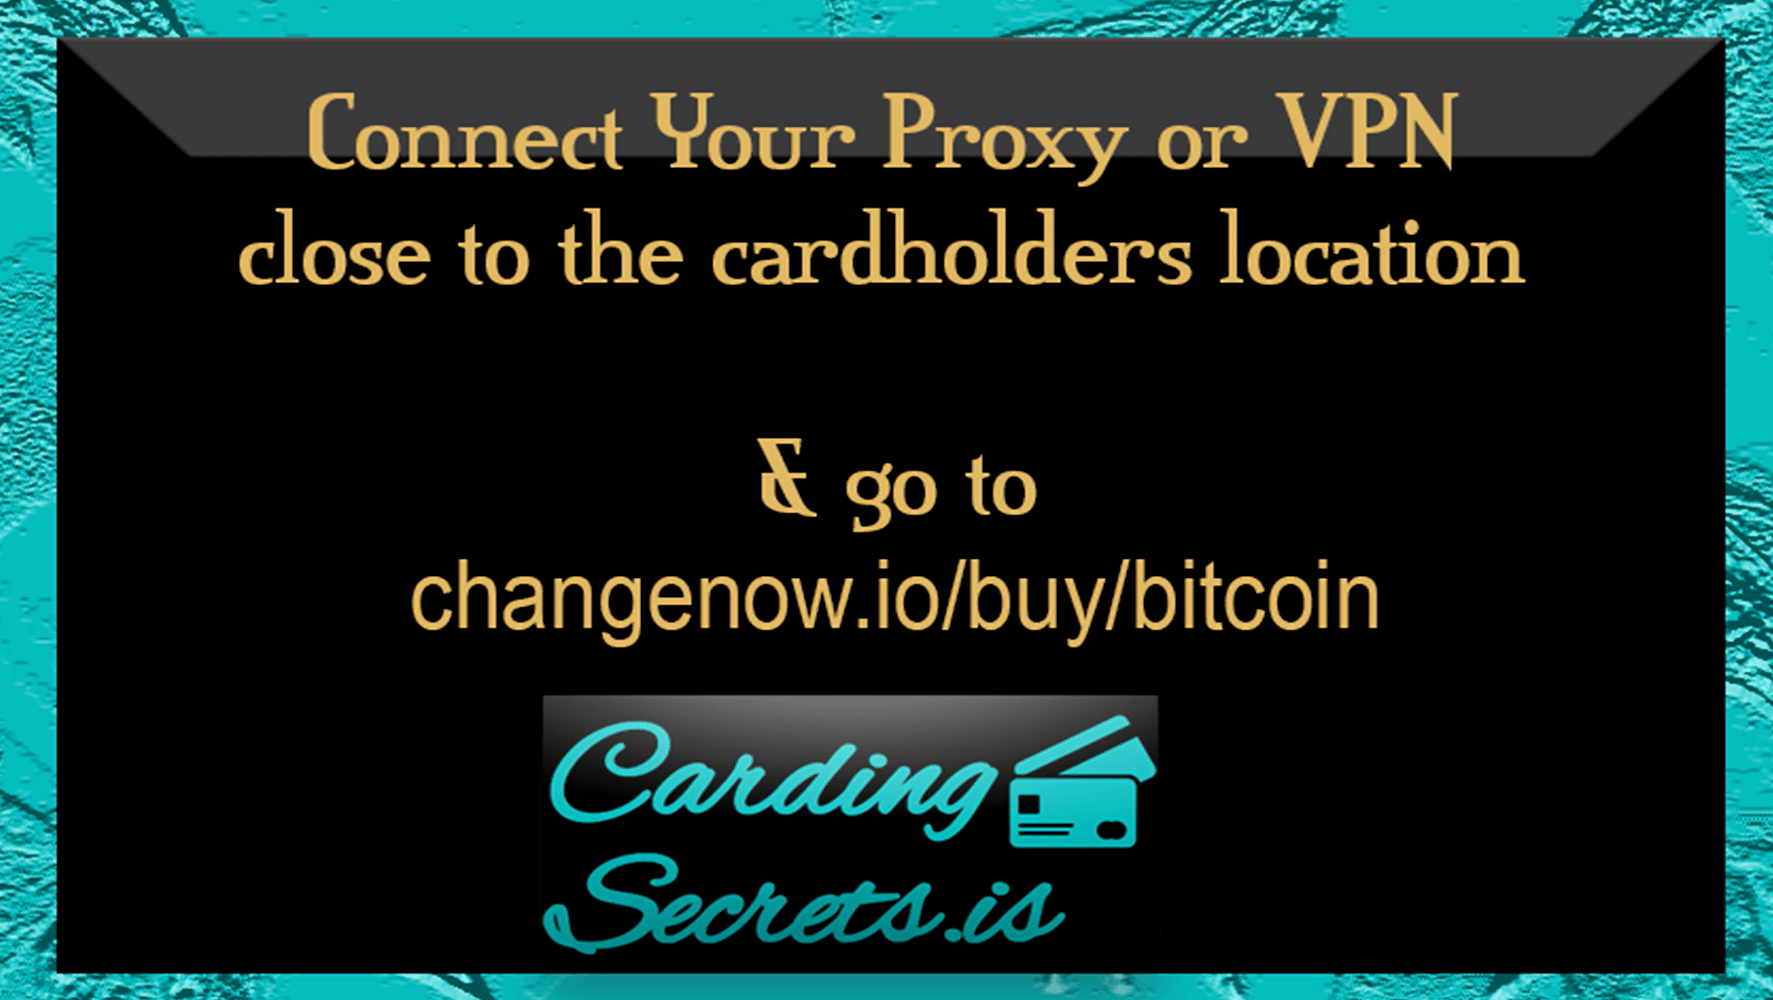 changenow bitcoin carding method go to